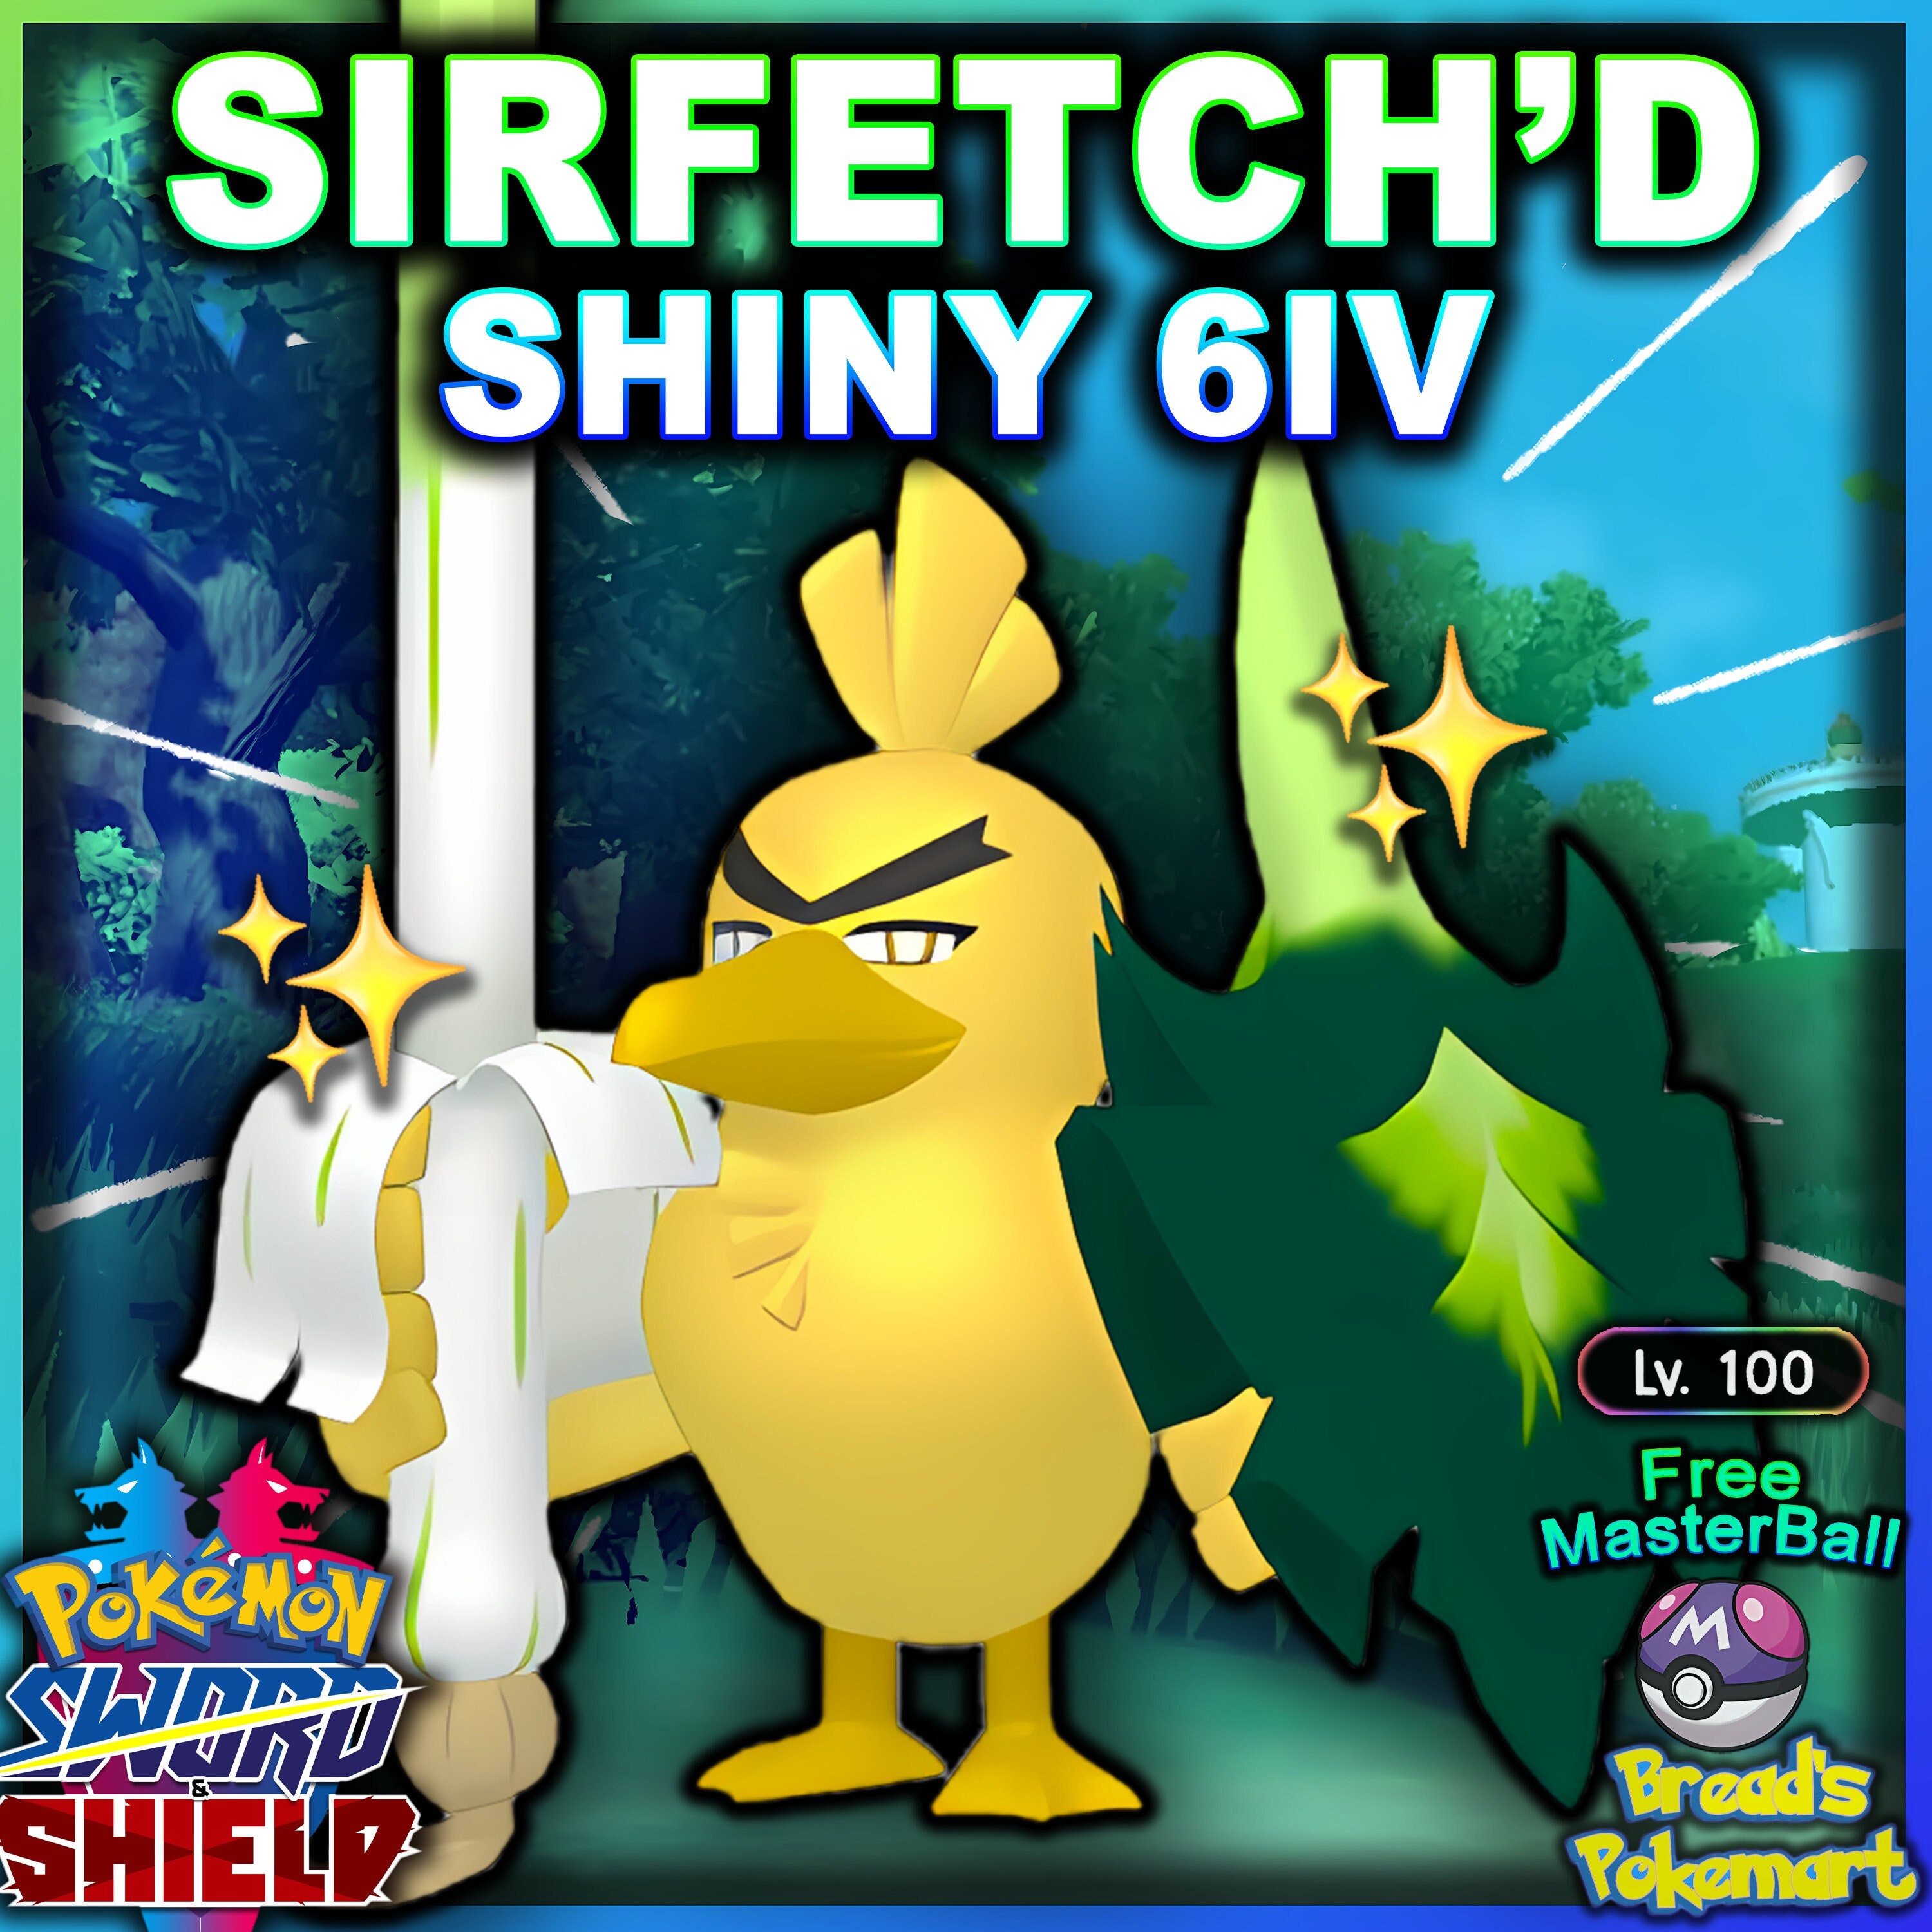 Shiny Sirfetch'd 